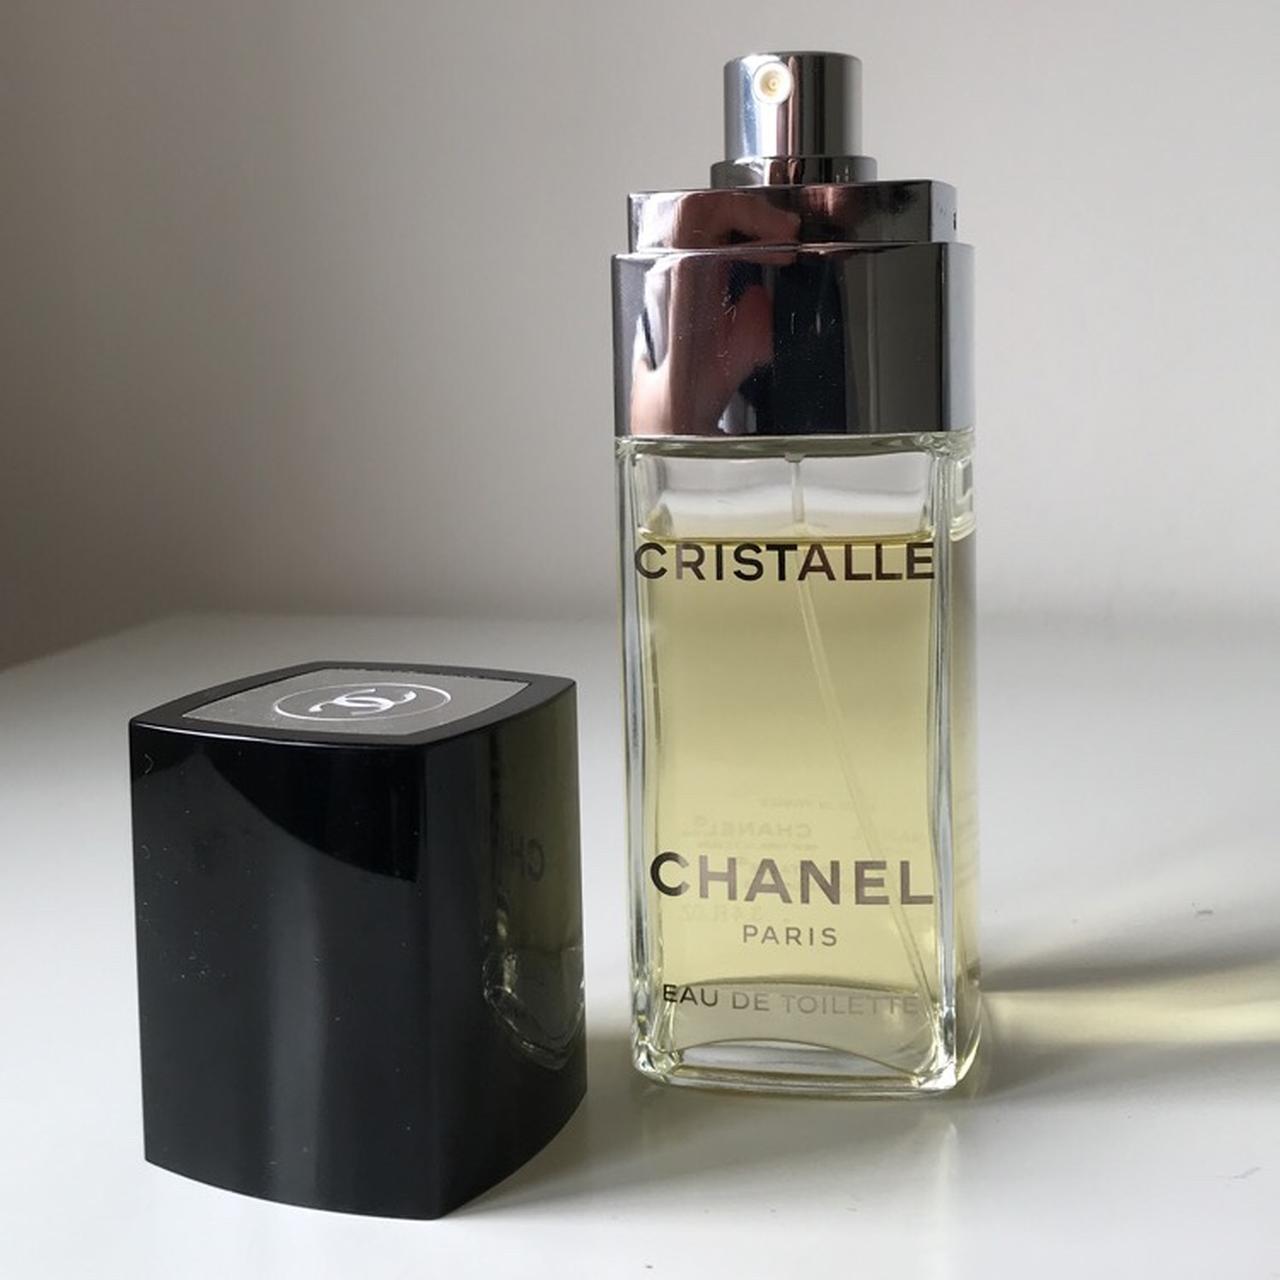 Mua Nước Hoa Nữ Chanel Cristalle EDP 100ml  Chanel  Mua tại Vua Hàng Hiệu  h027629